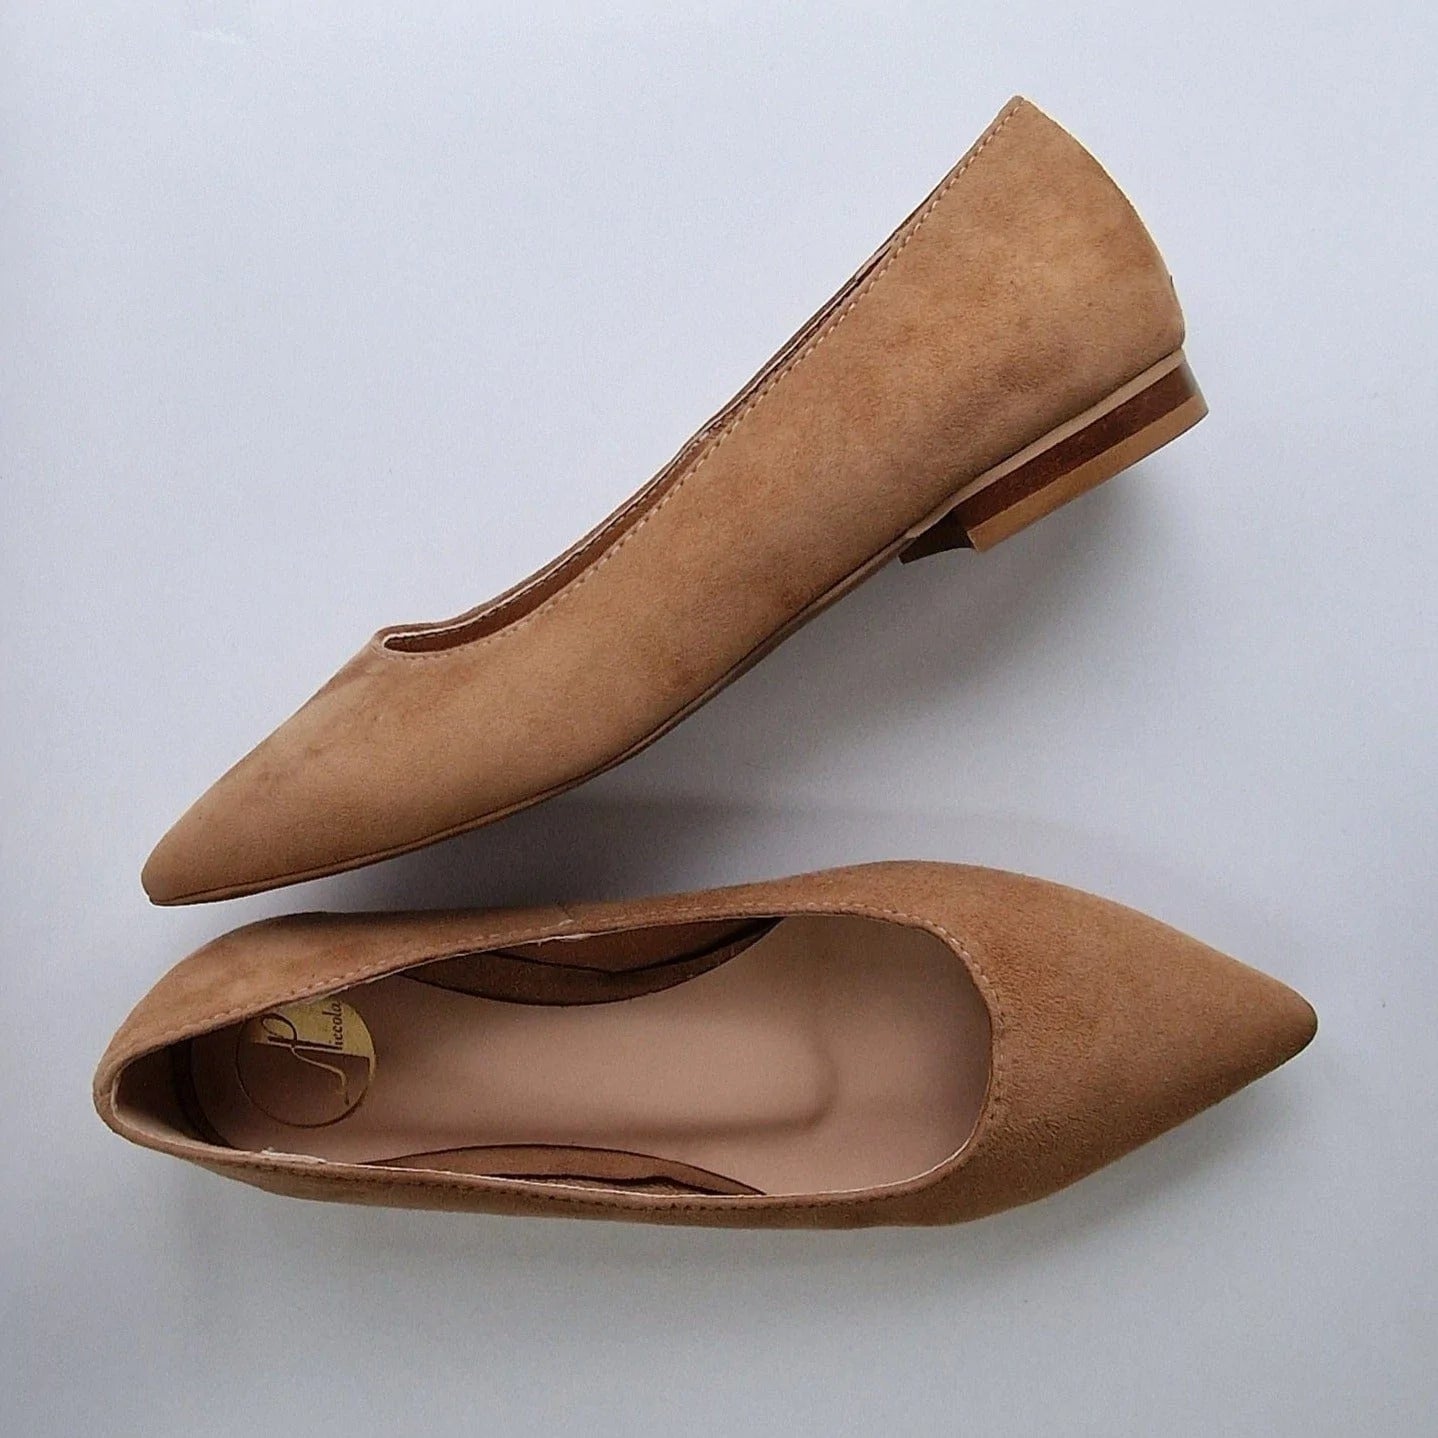 Pointed toe brown suede ballerina pumps